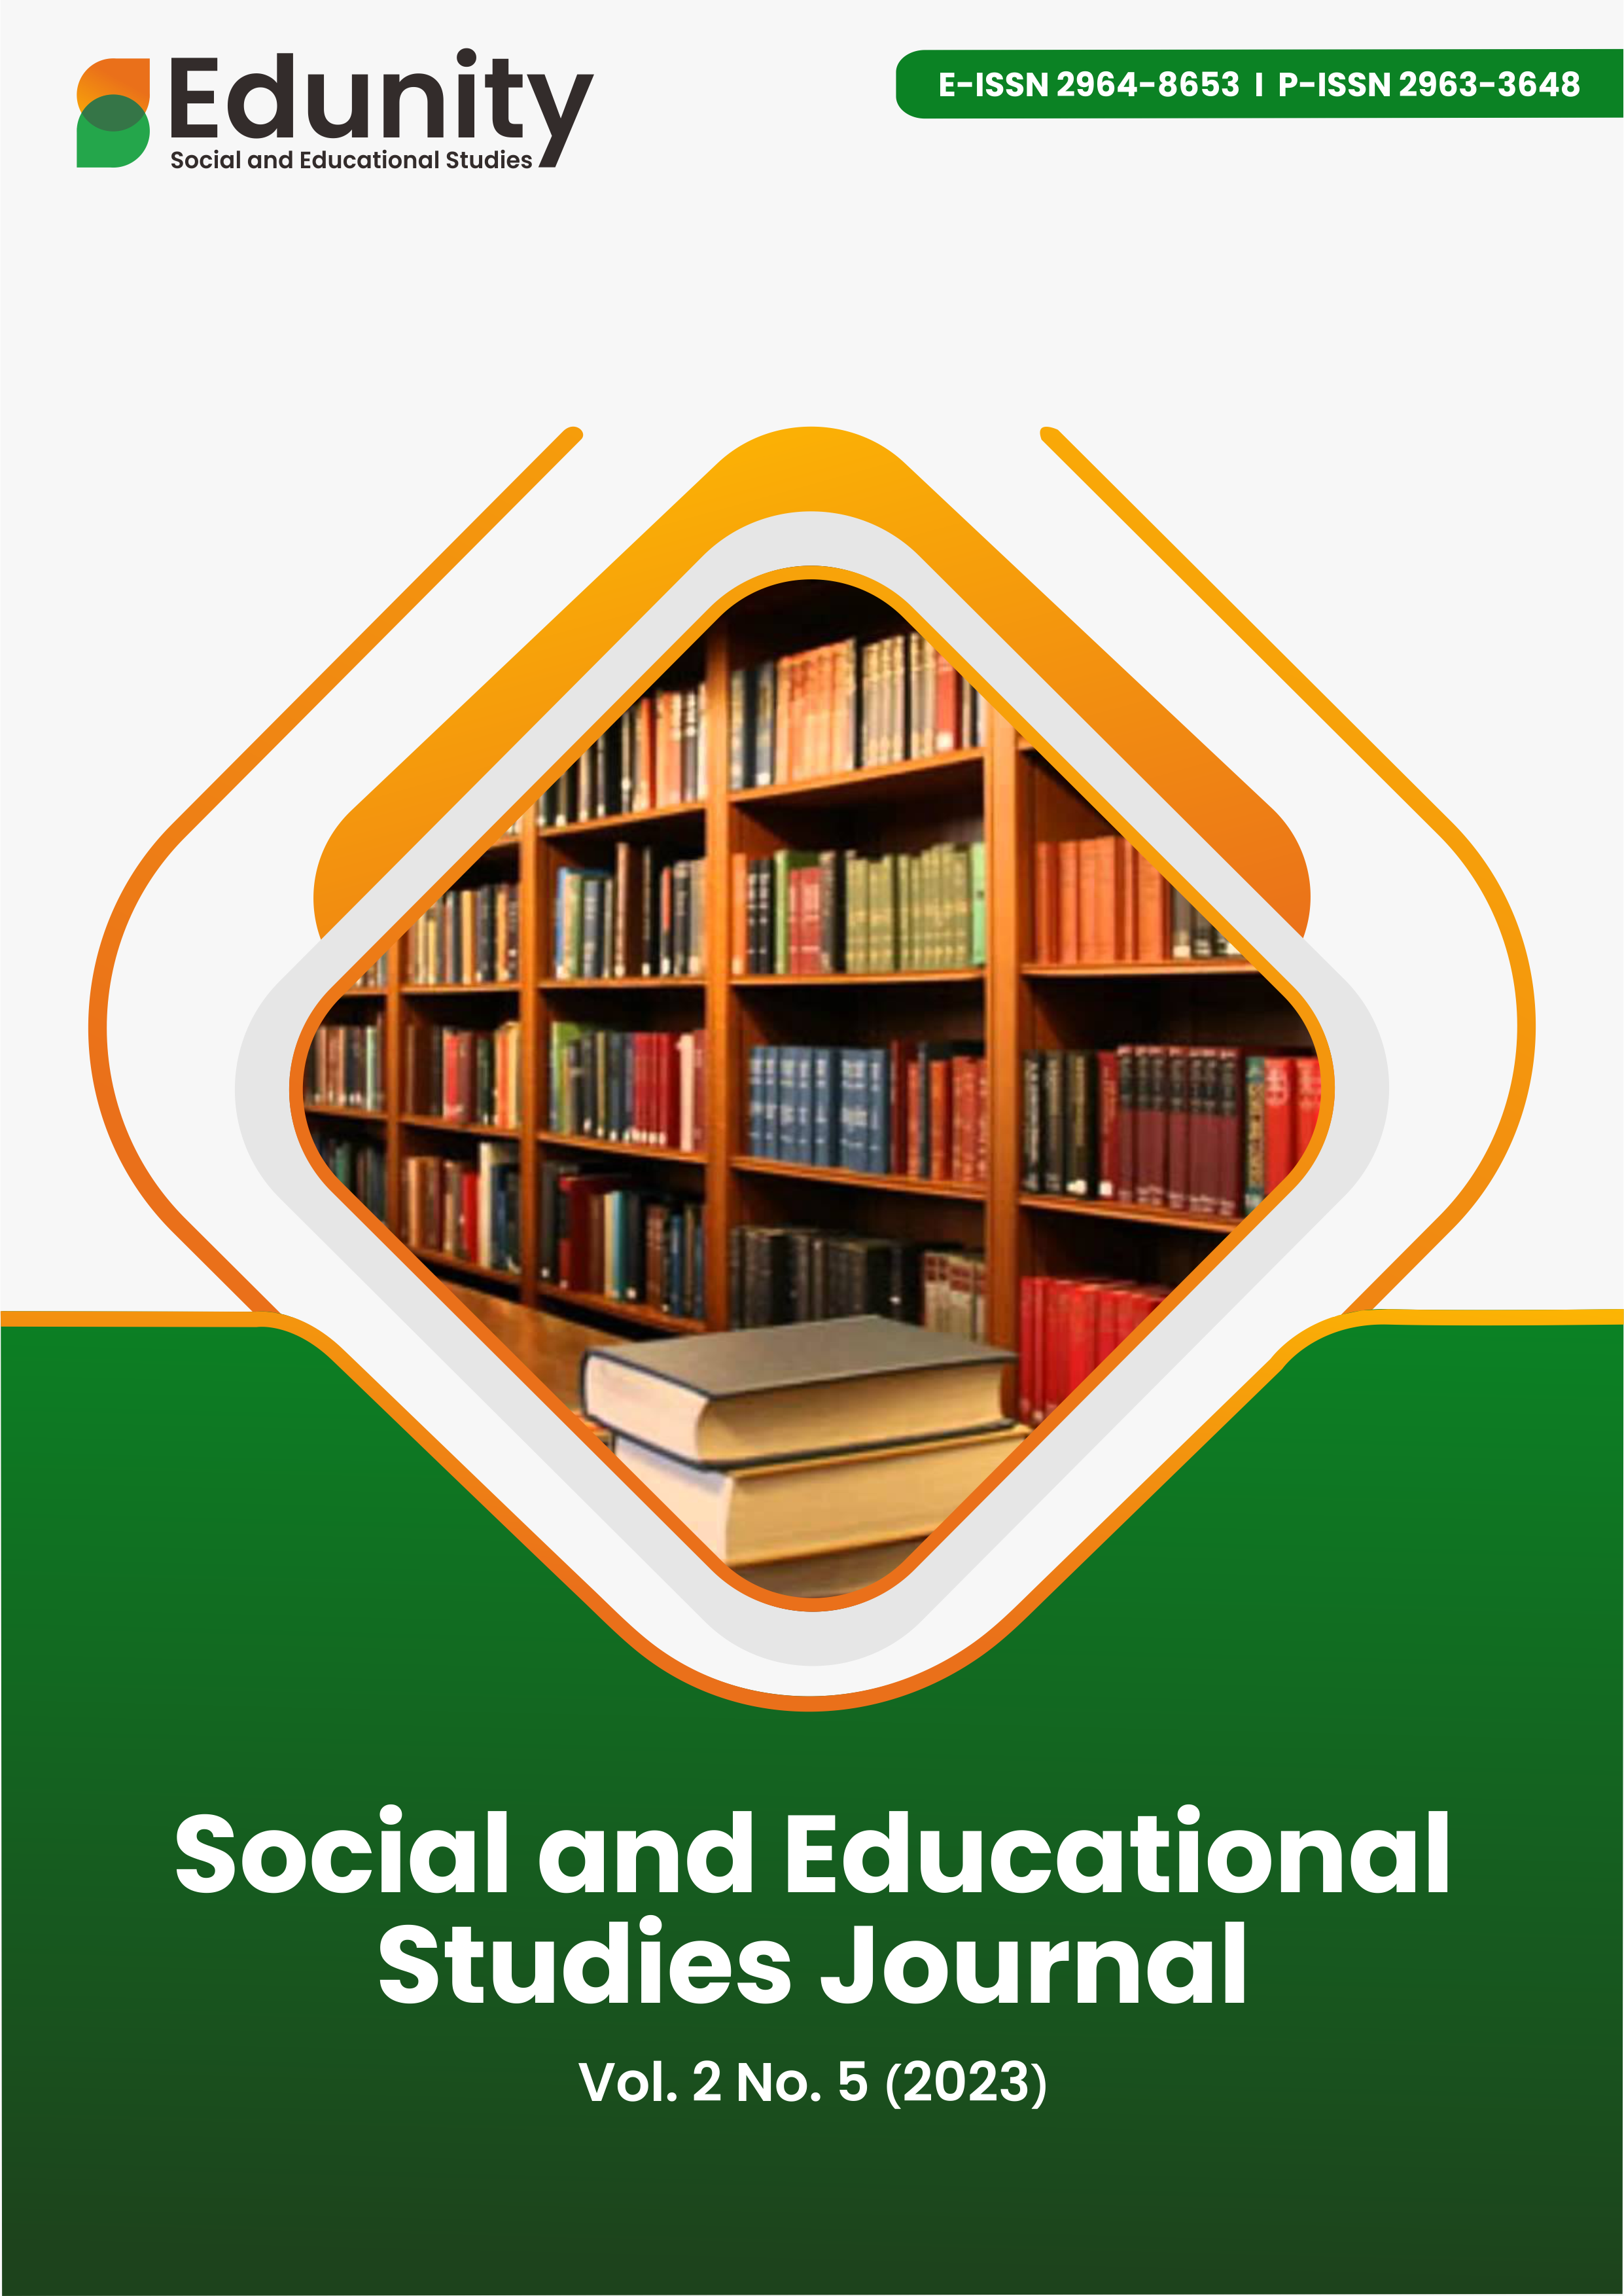 					View Vol. 2 No. 5 (2023): Edunity : Social and Educational Studies
				